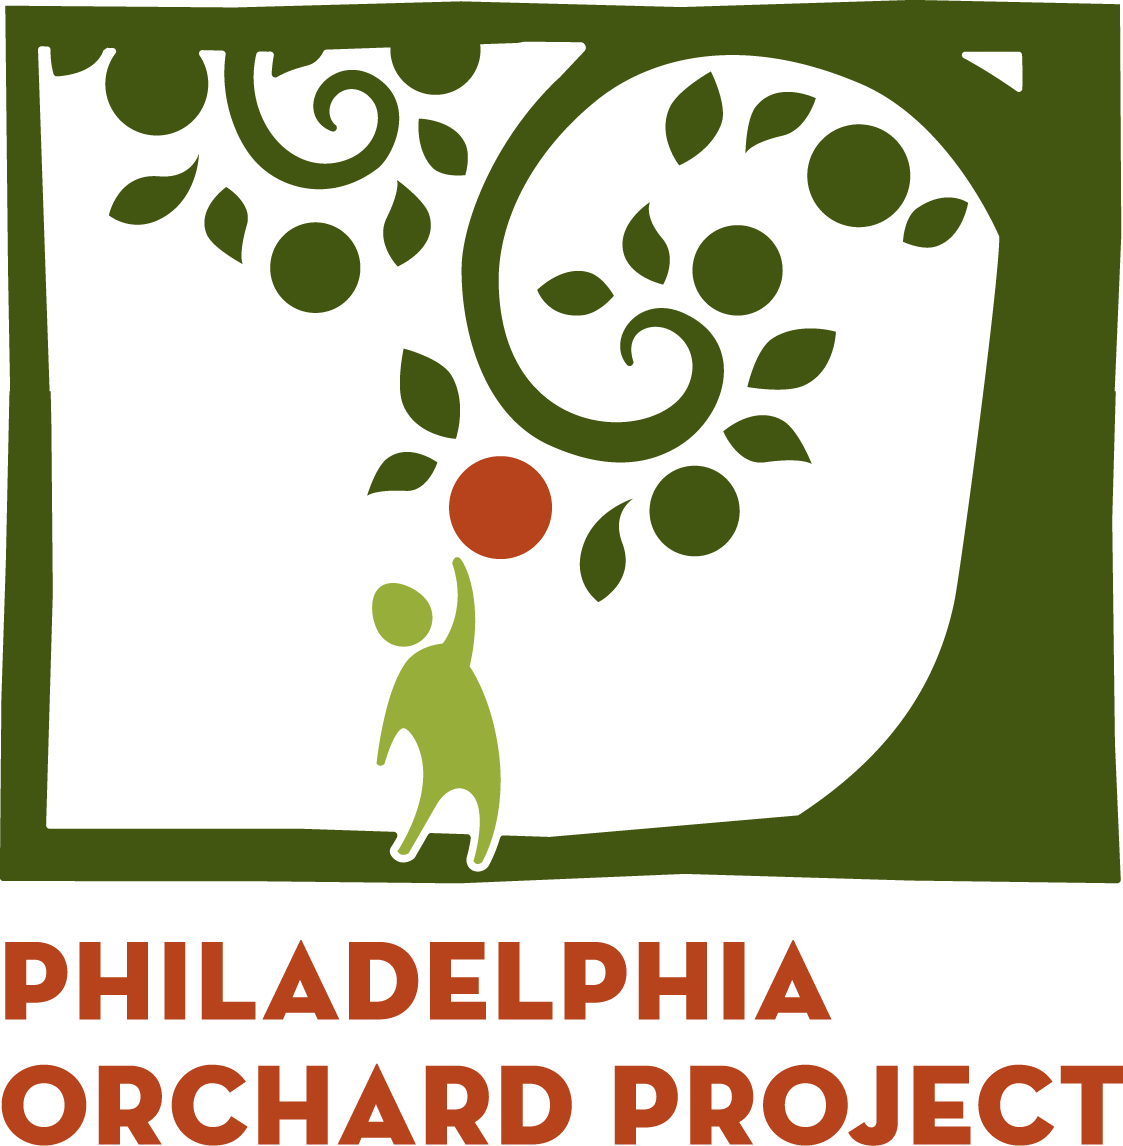 Philadelphia Orchard Project logo